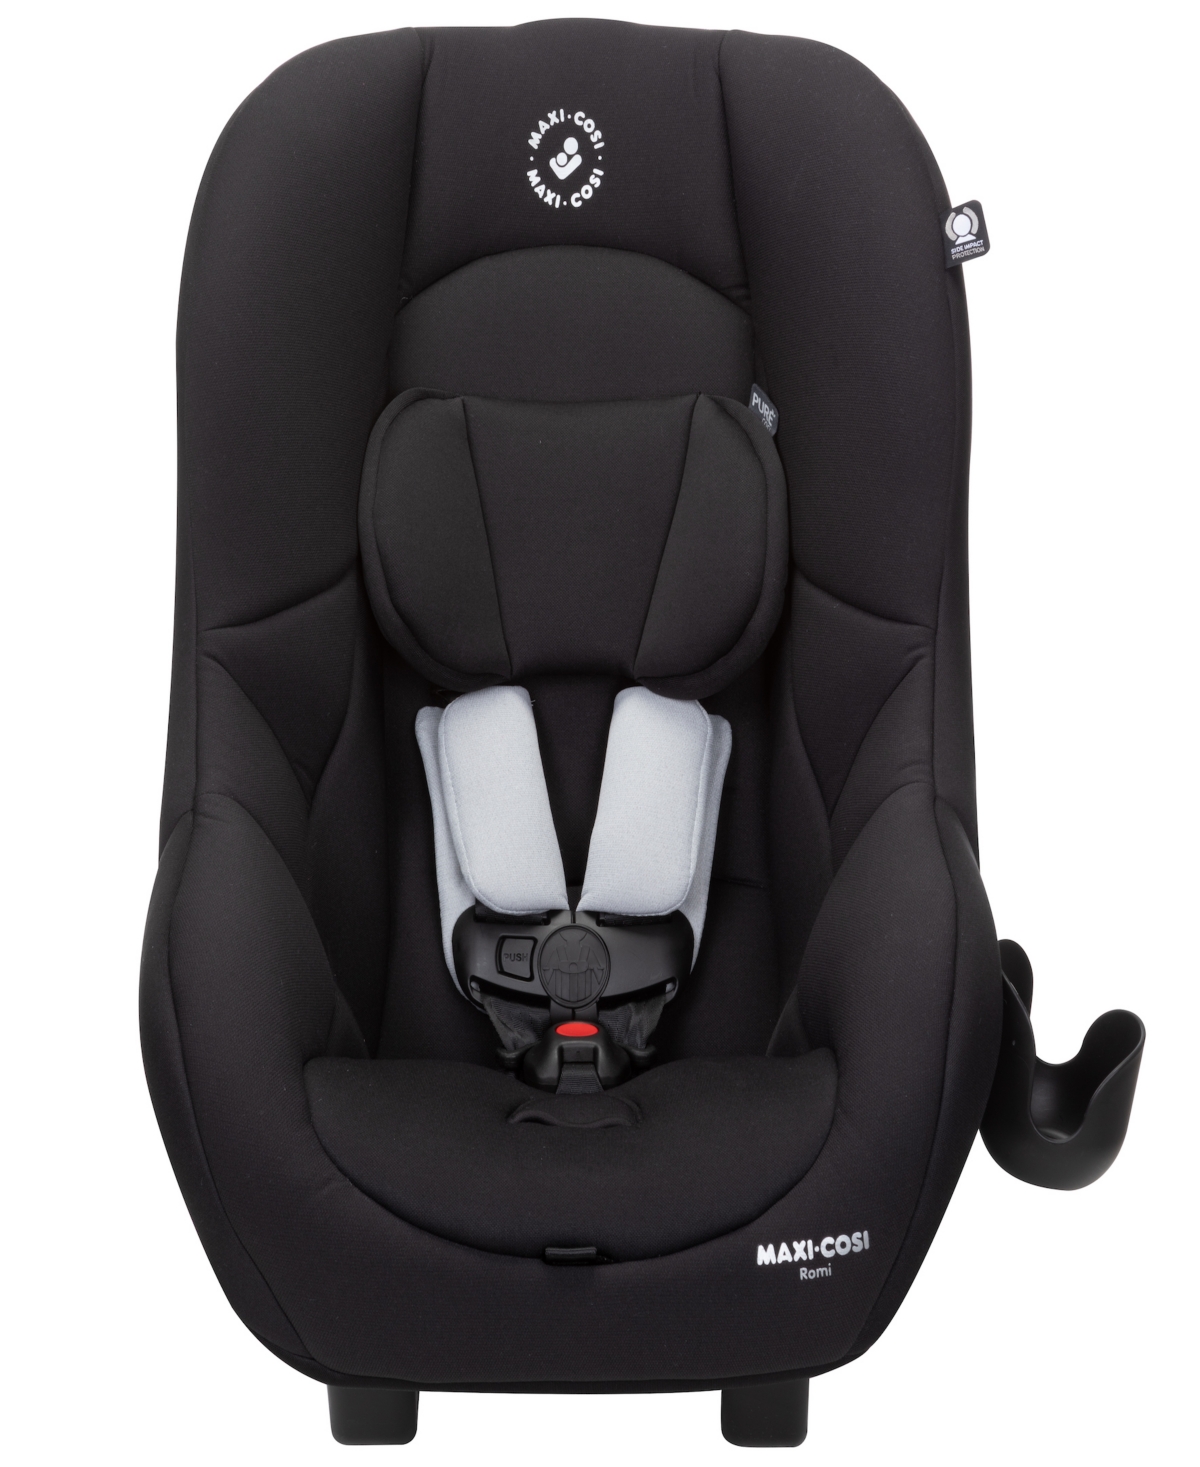 Maxi-cosi Romi Car Seat In Essential Black